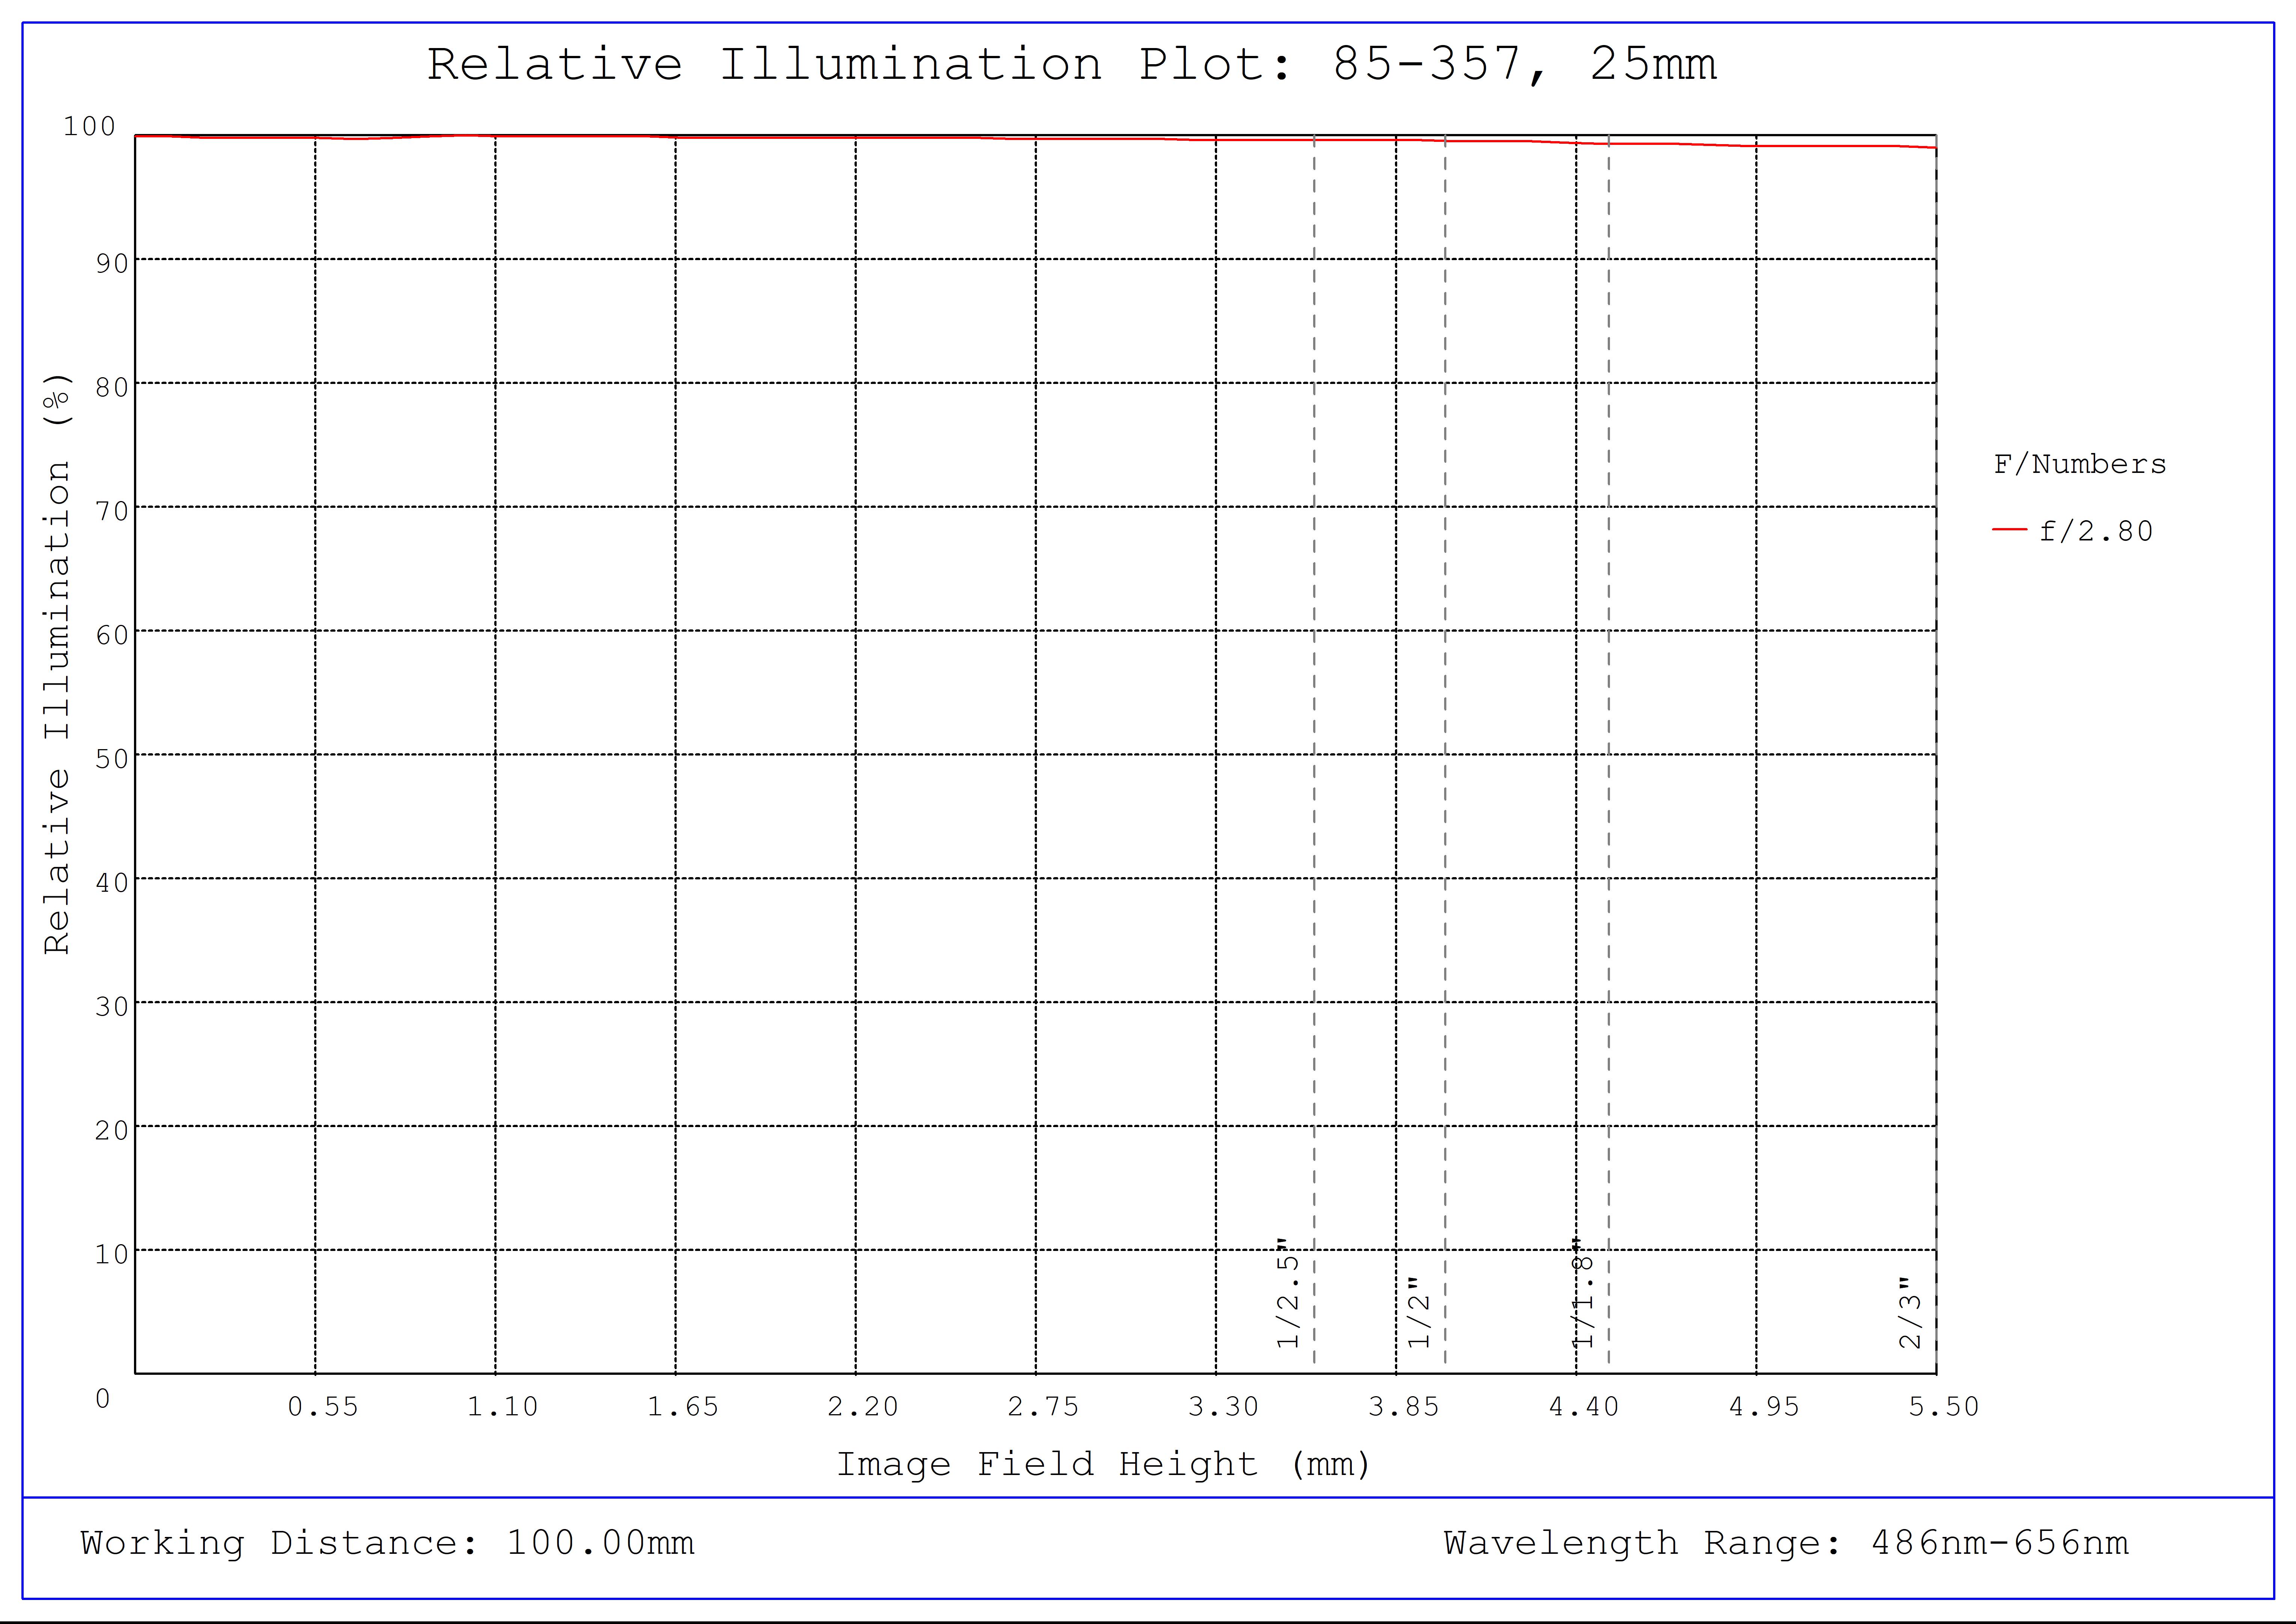 #85-357, 25mm, f/2.8 Ci Series Fixed Focal Length Lens, Relative Illumination Plot